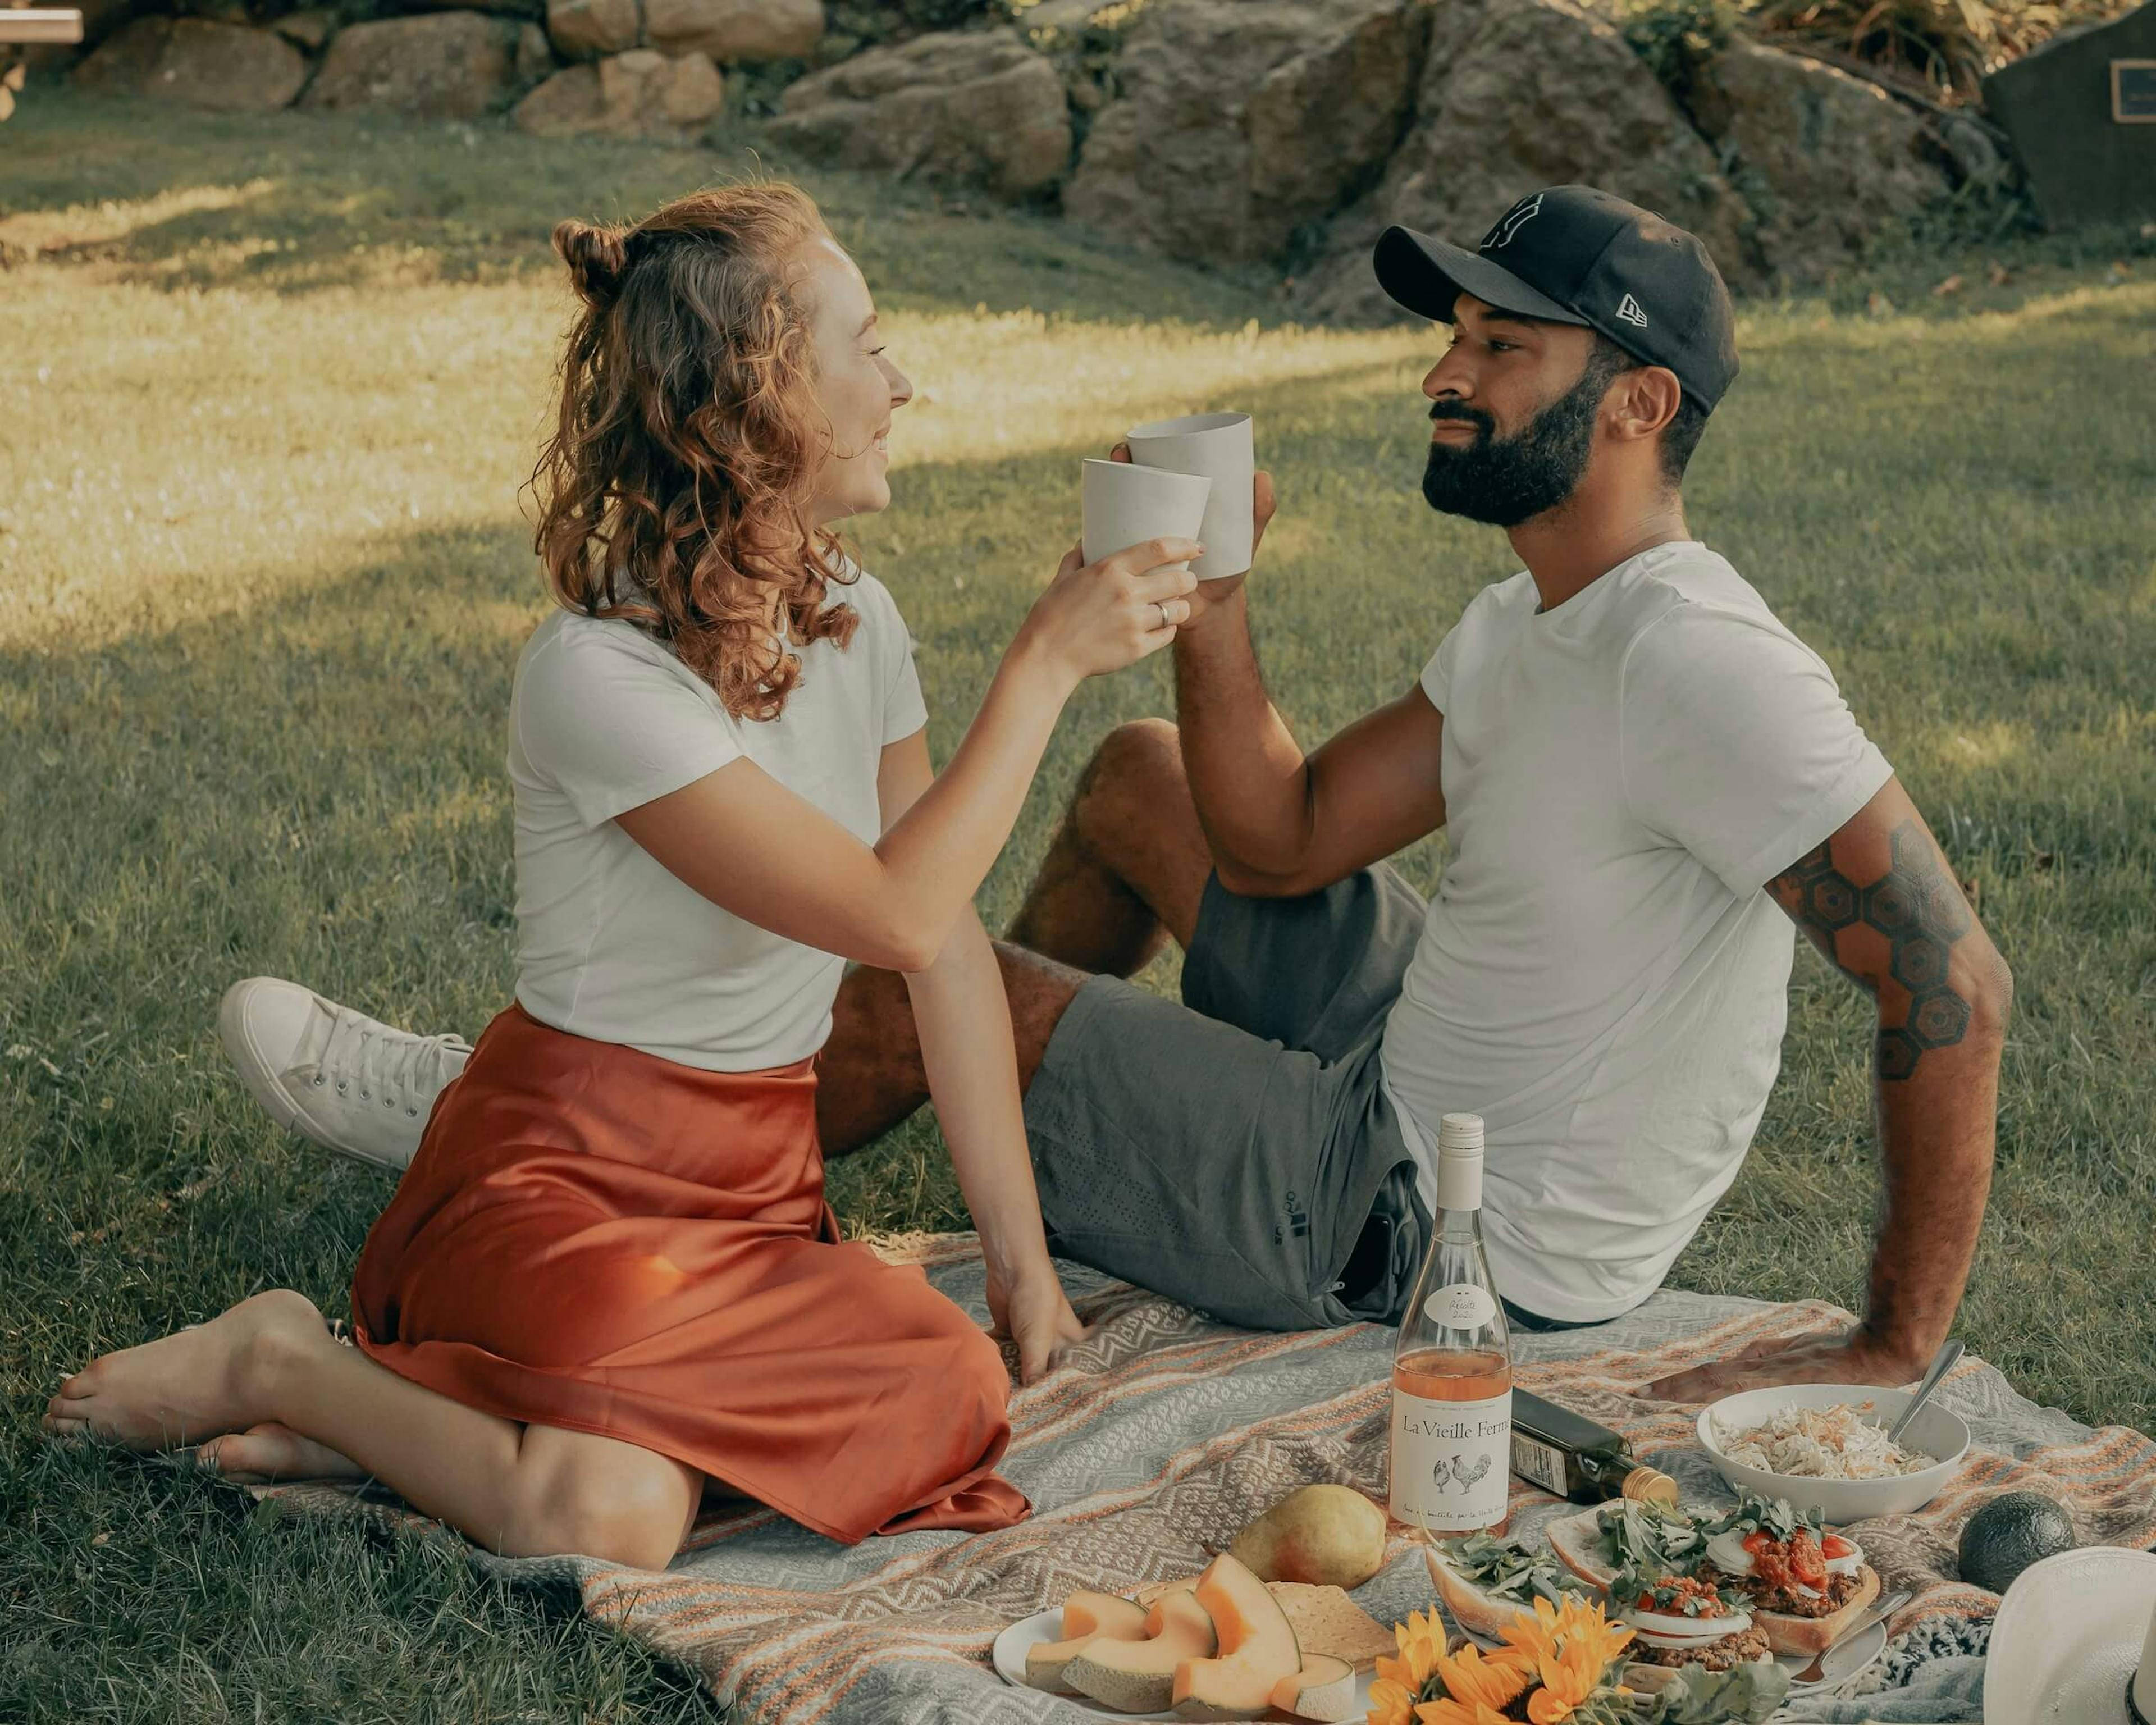 A couple enjoys a picnic on the grass near some rocks